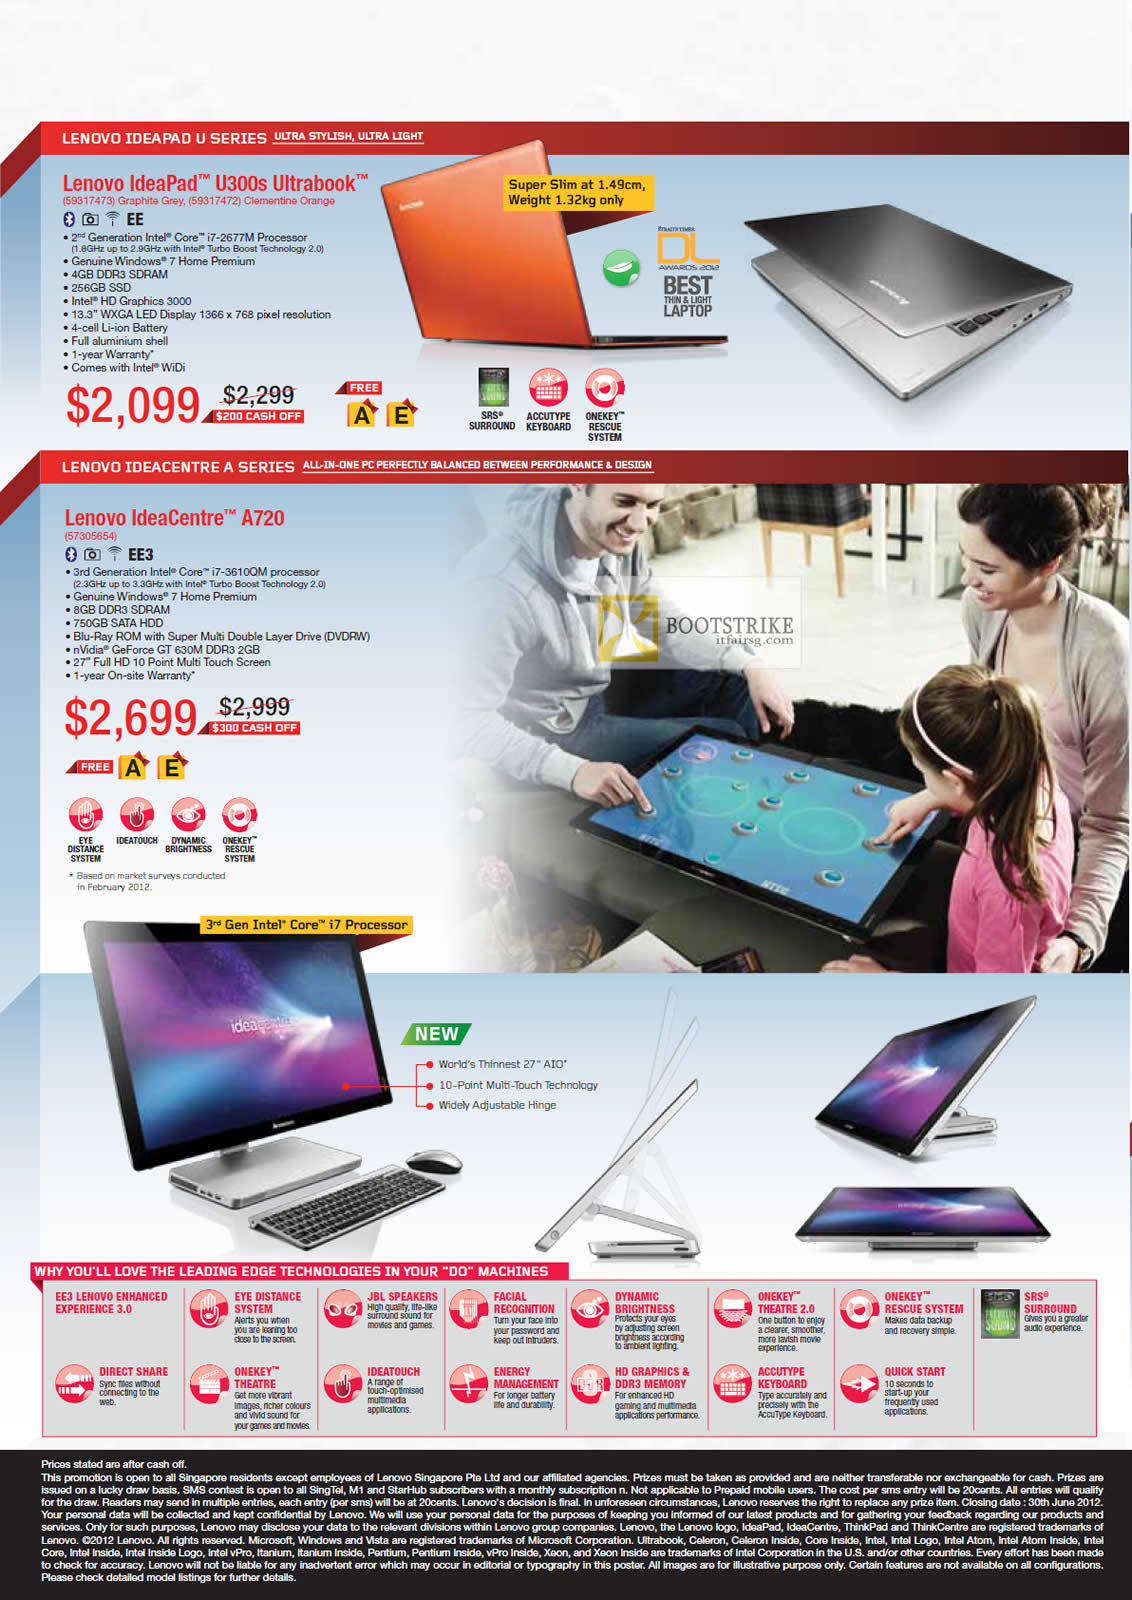 PC SHOW 2012 price list image brochure of Lenovo Notebooks IdeaPad U300s Ultrabook, IdeaCentre A720 AIO Desktop PC